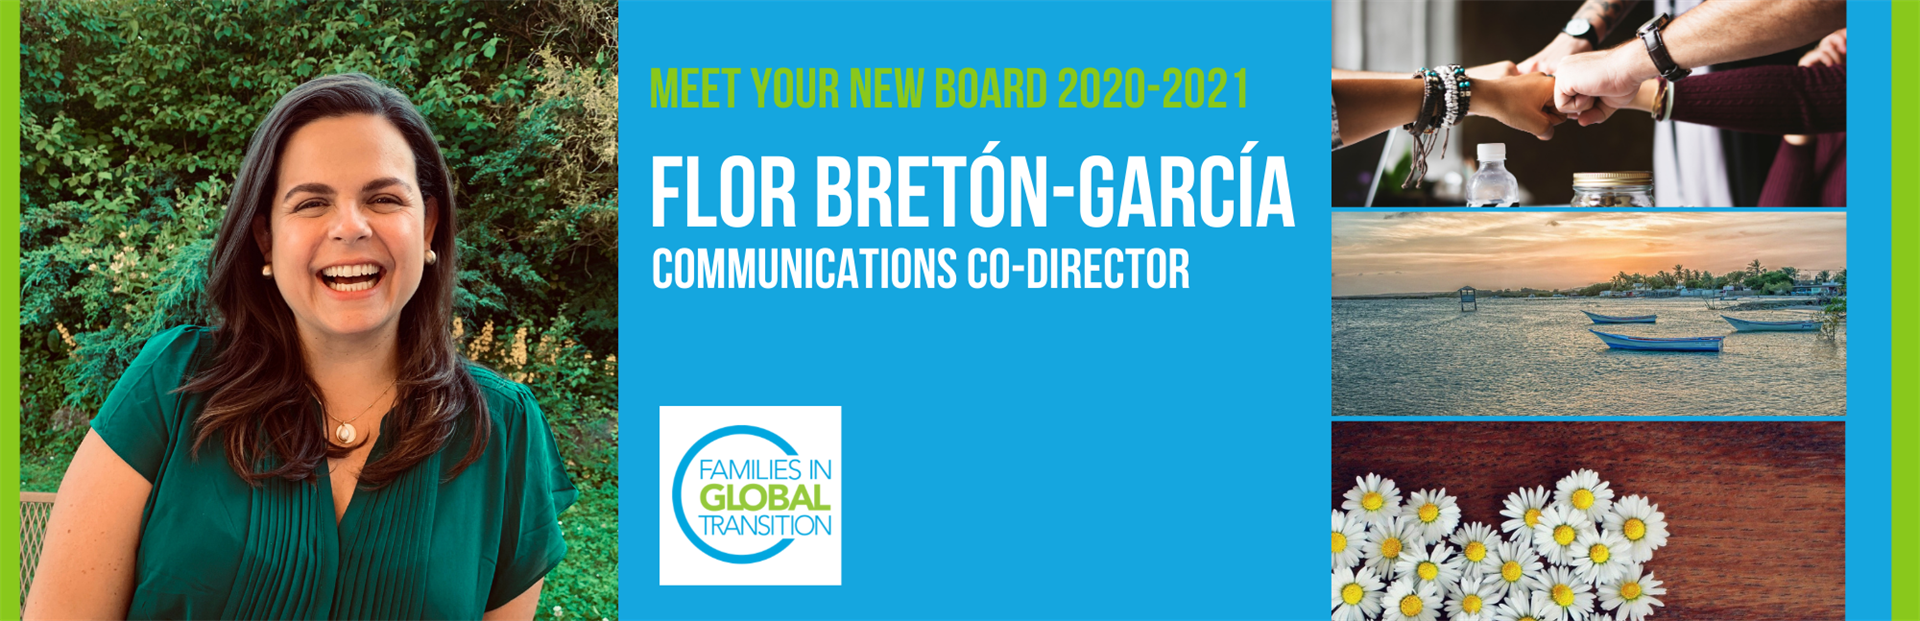 blog post title: Meet the new FIGT communications co-director Flor Bretón-García